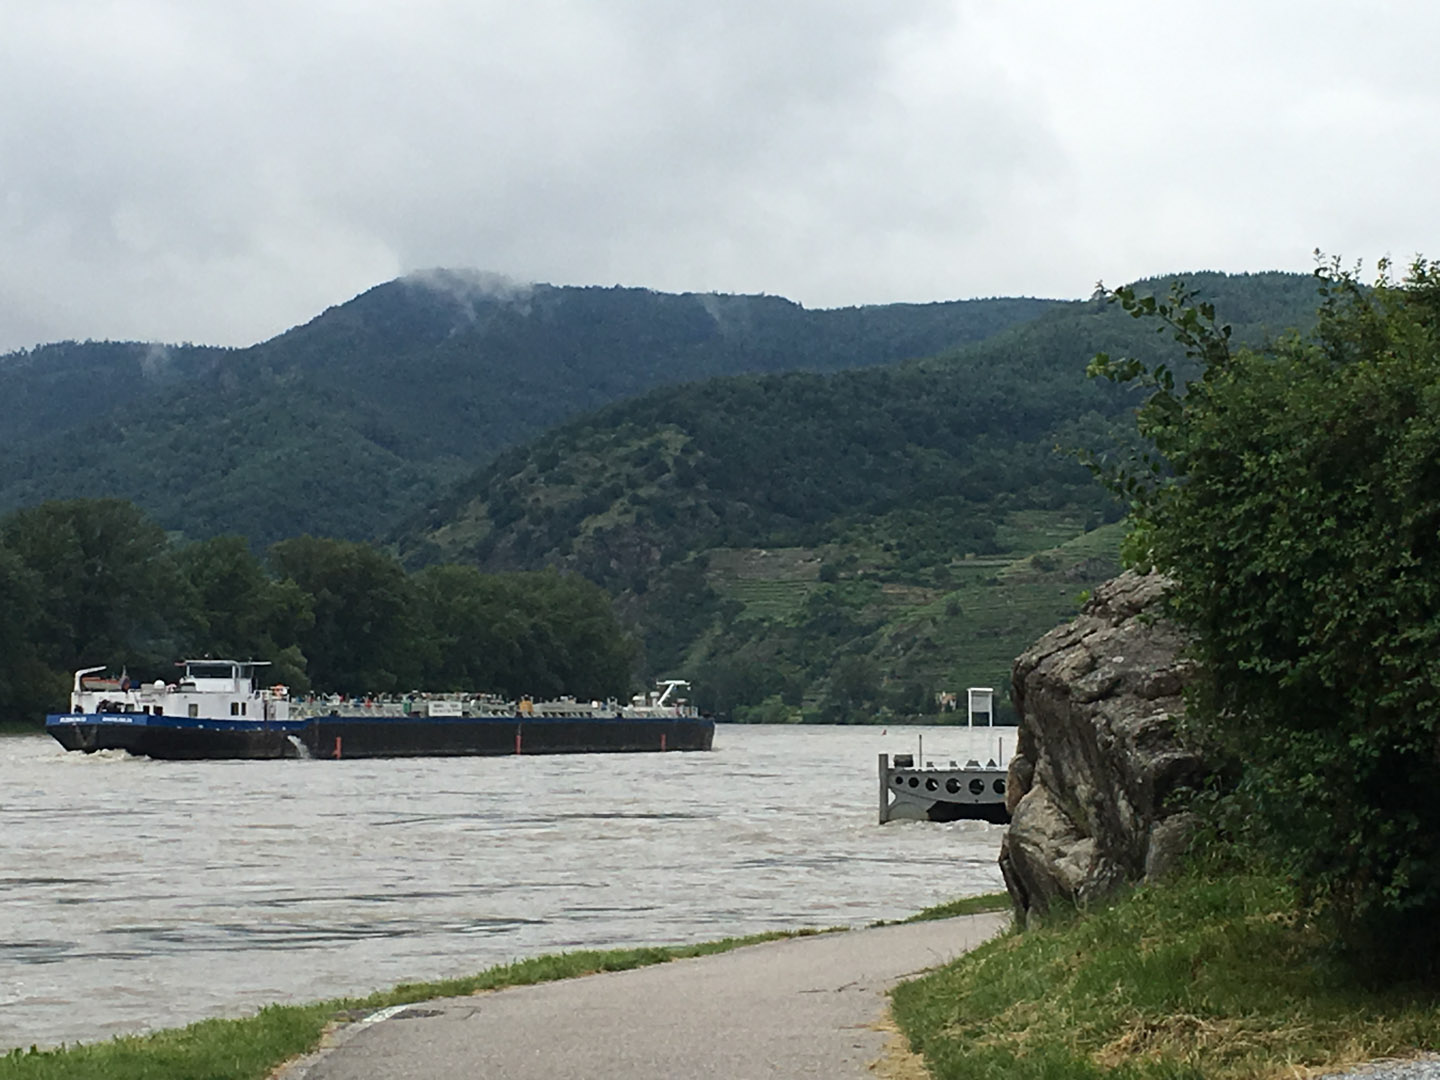 The swollen Rhine